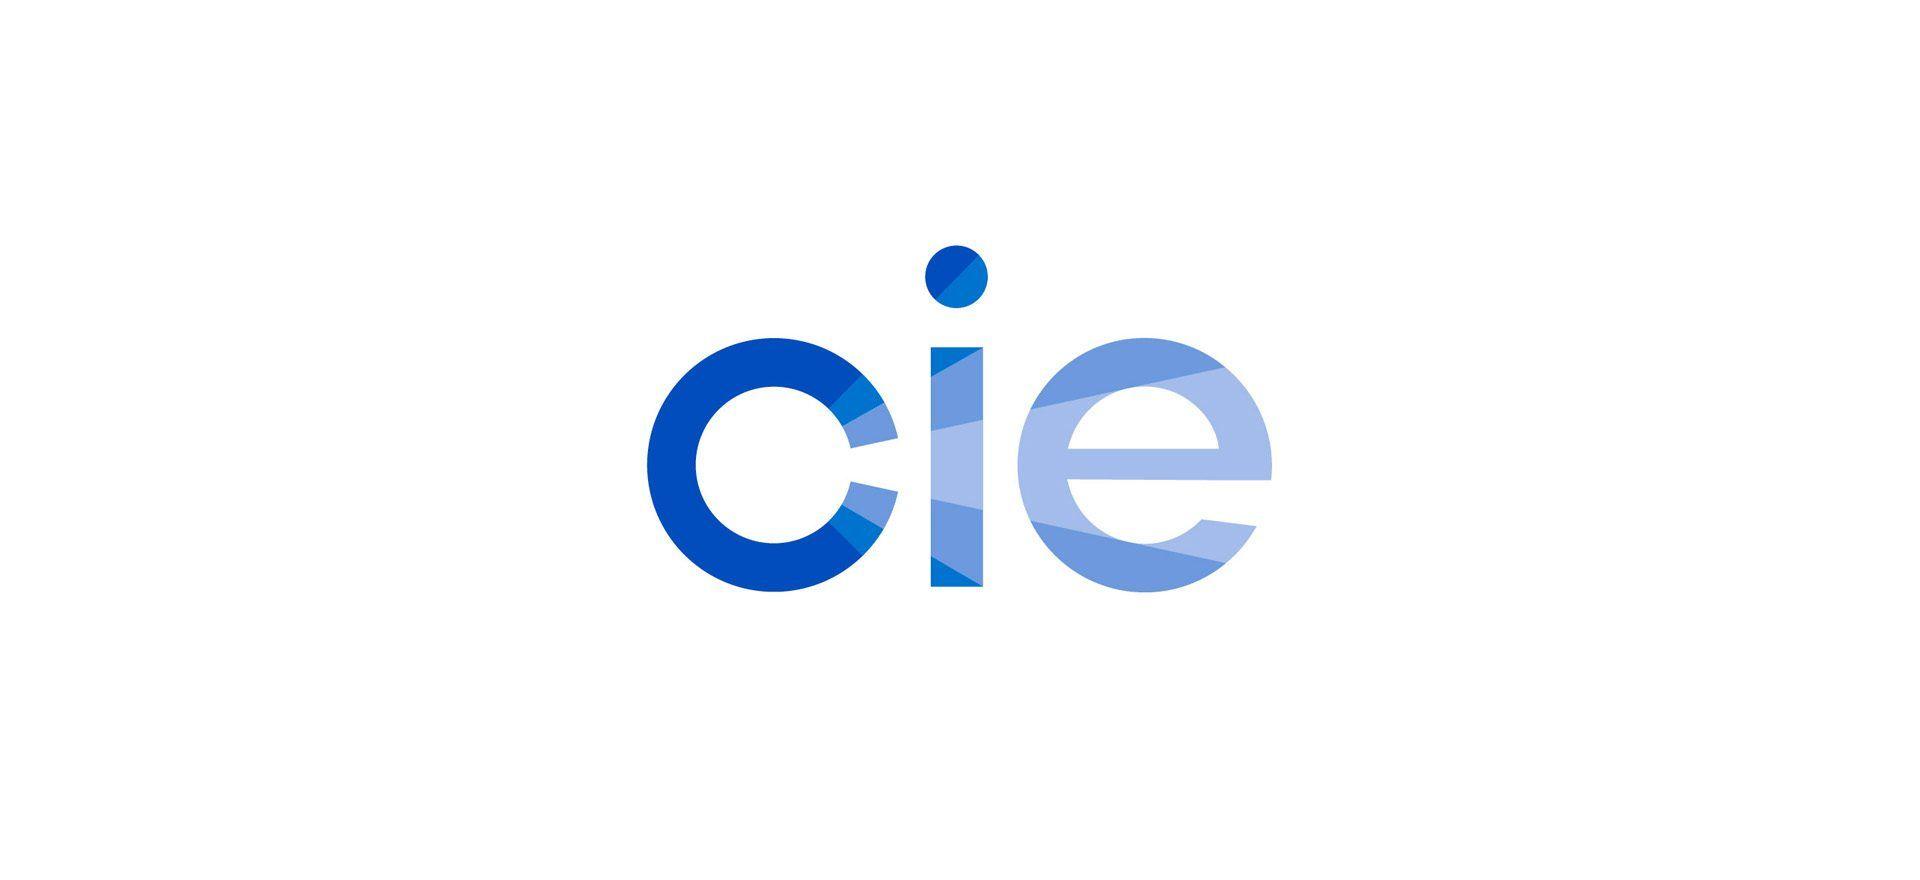 CIE Logo - Jueves Design - International Commission on Illumination logo redesign